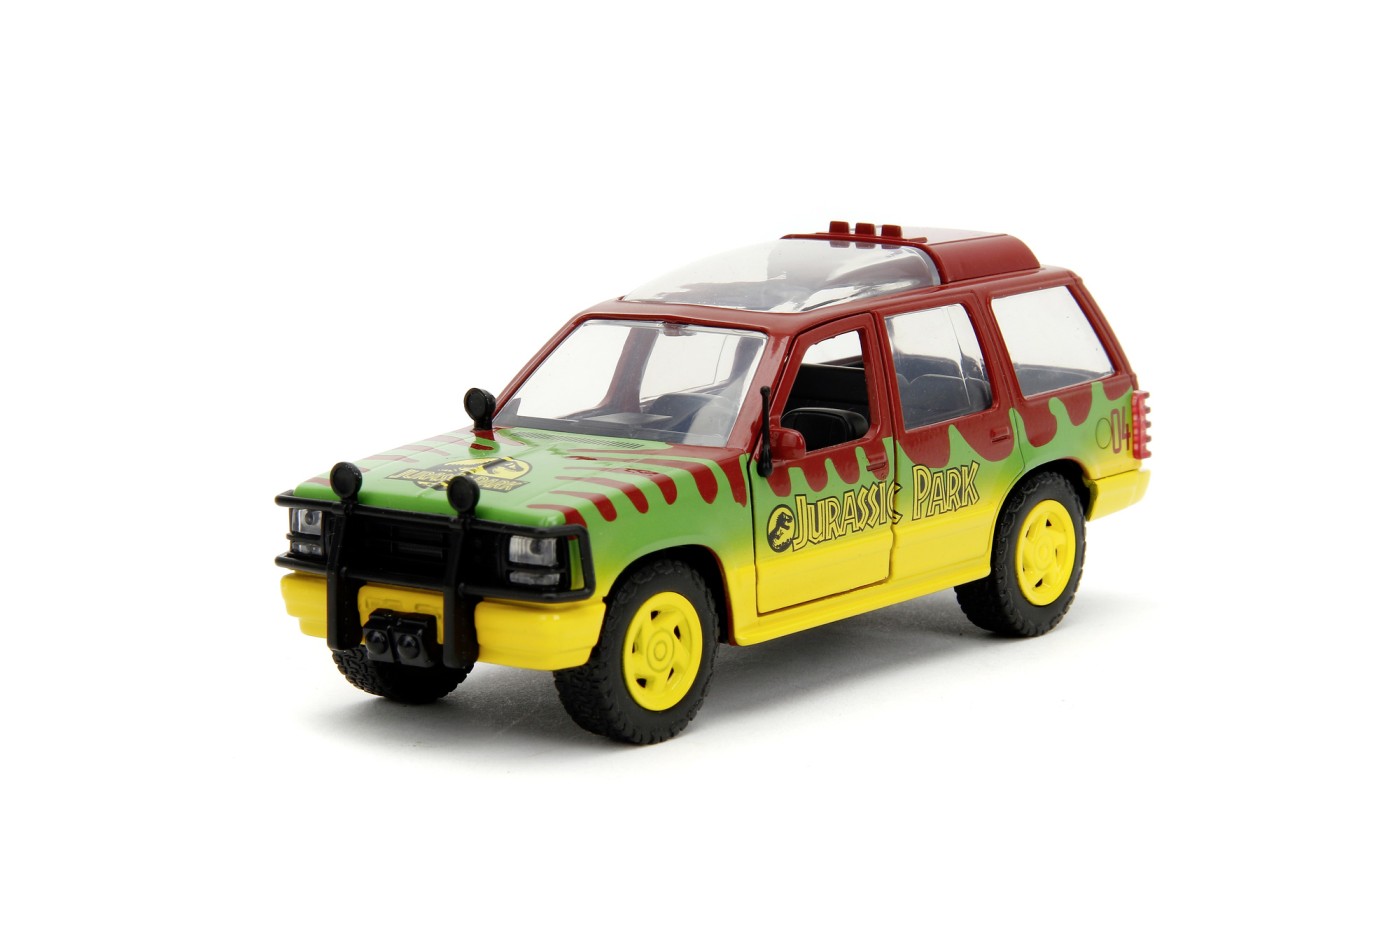 Masina - Jurassic Park 30th Anniversary - Ford Explorer | Jada Toys